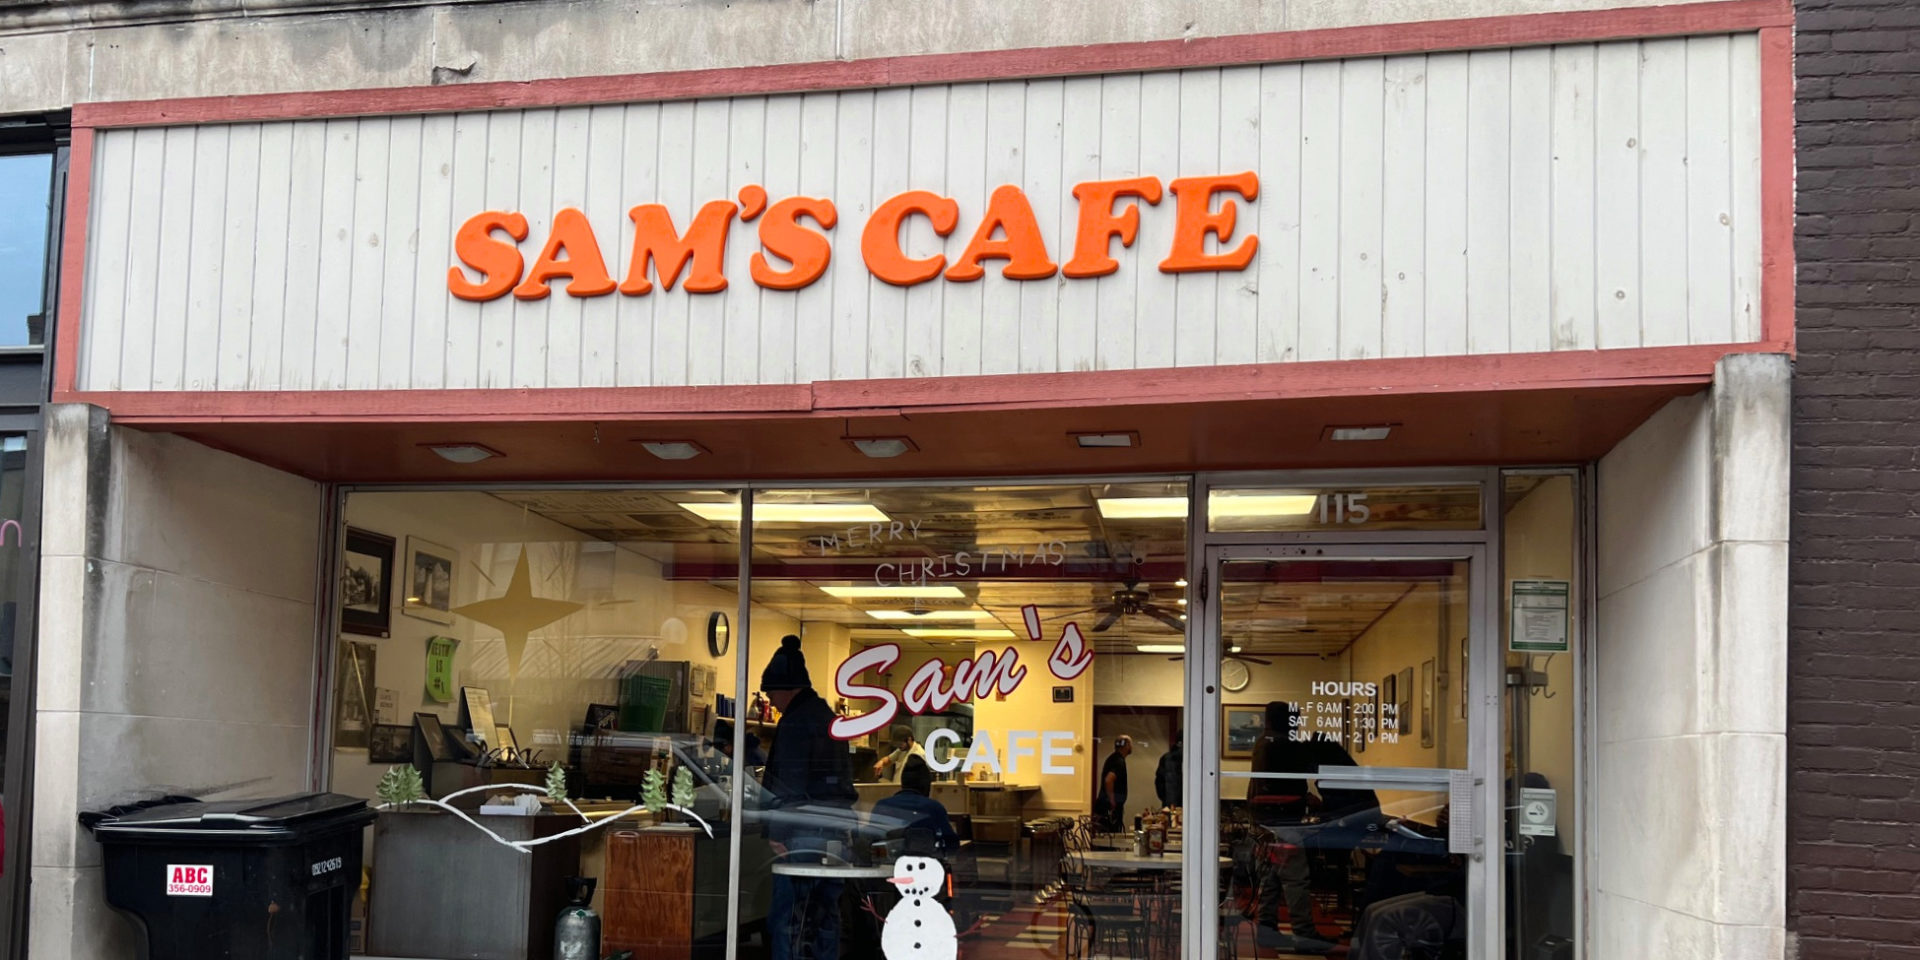 Sam’s Cafe open for dinner starting this week